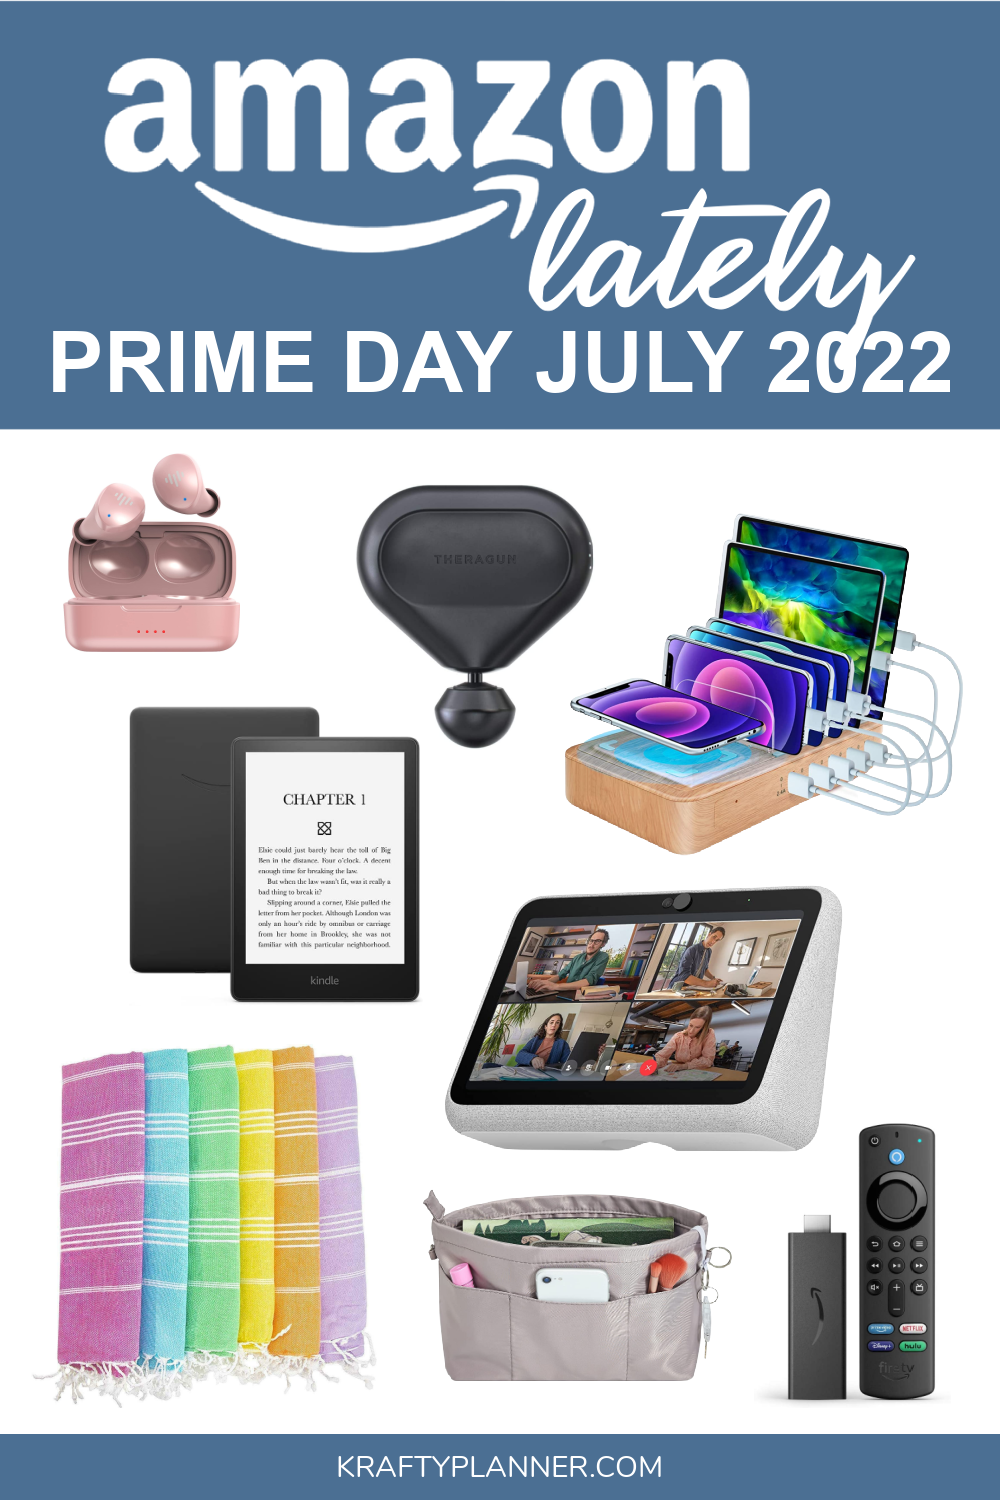 Amazon Lately Prime Day July 2022